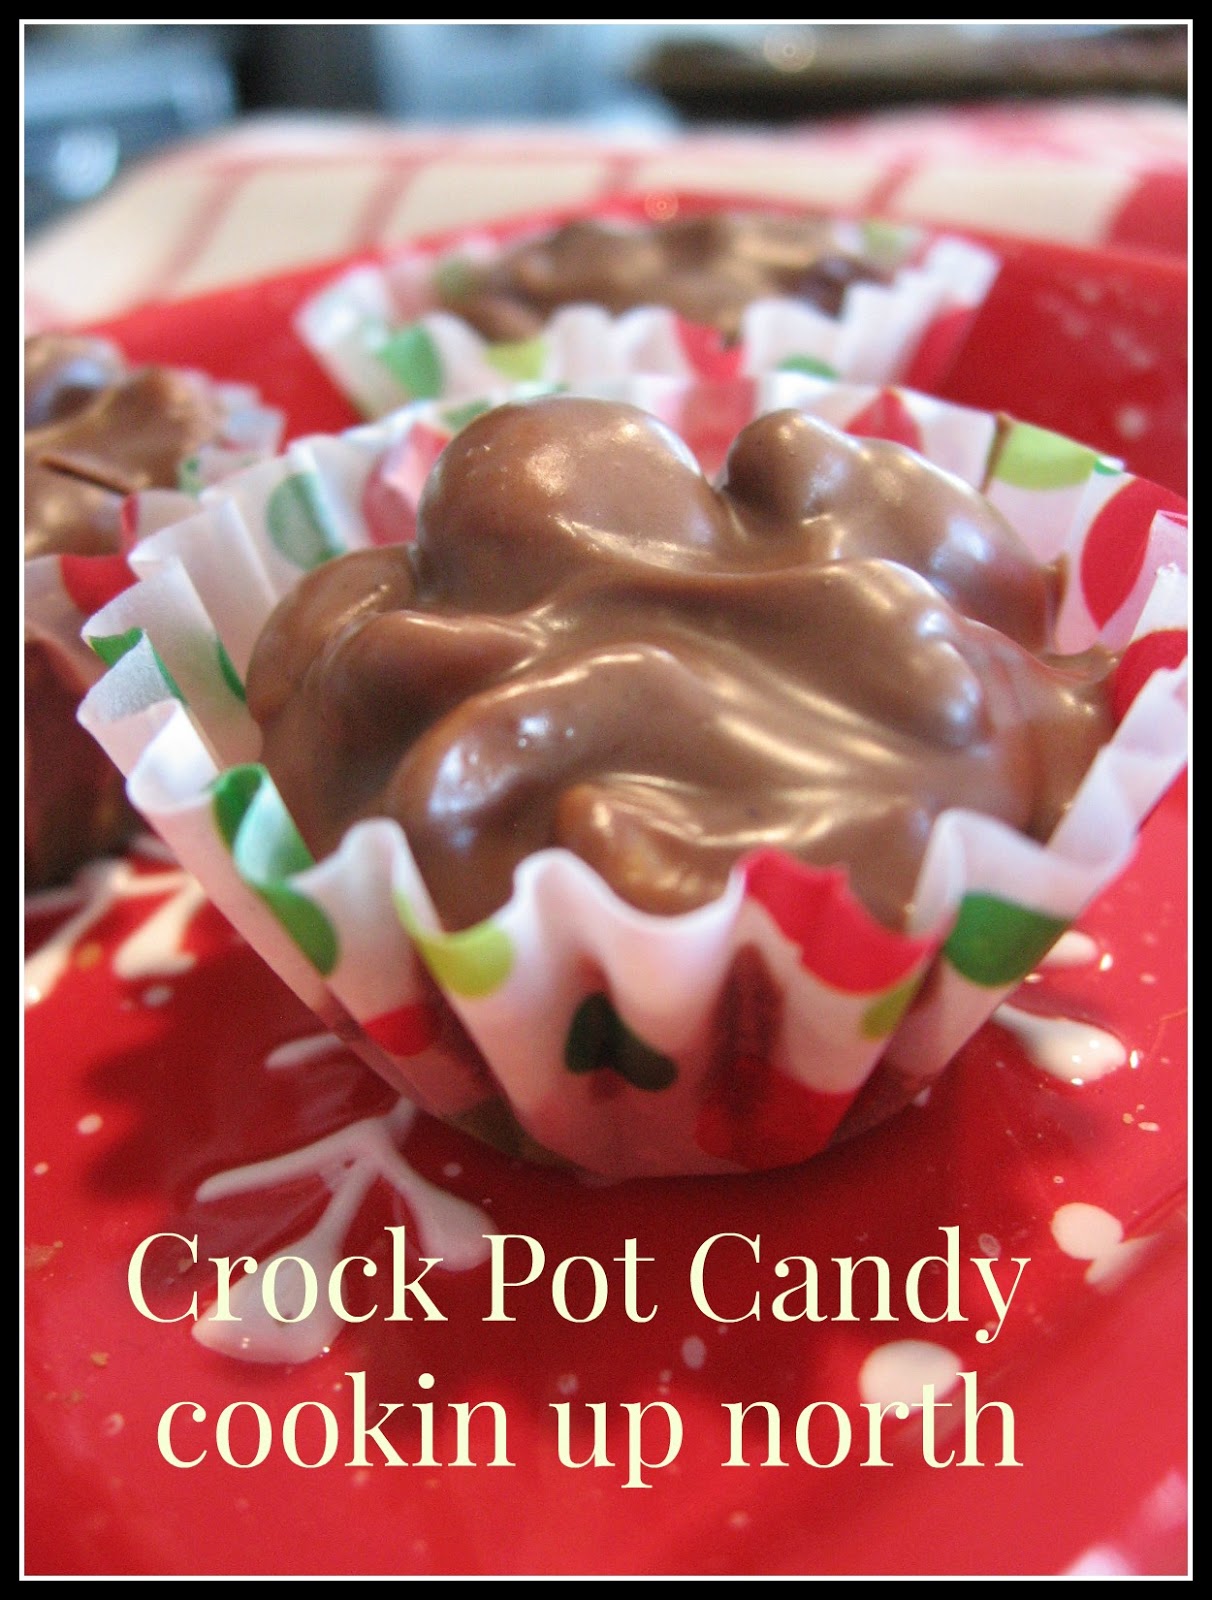 cookin' up north: Crock Pot Candy